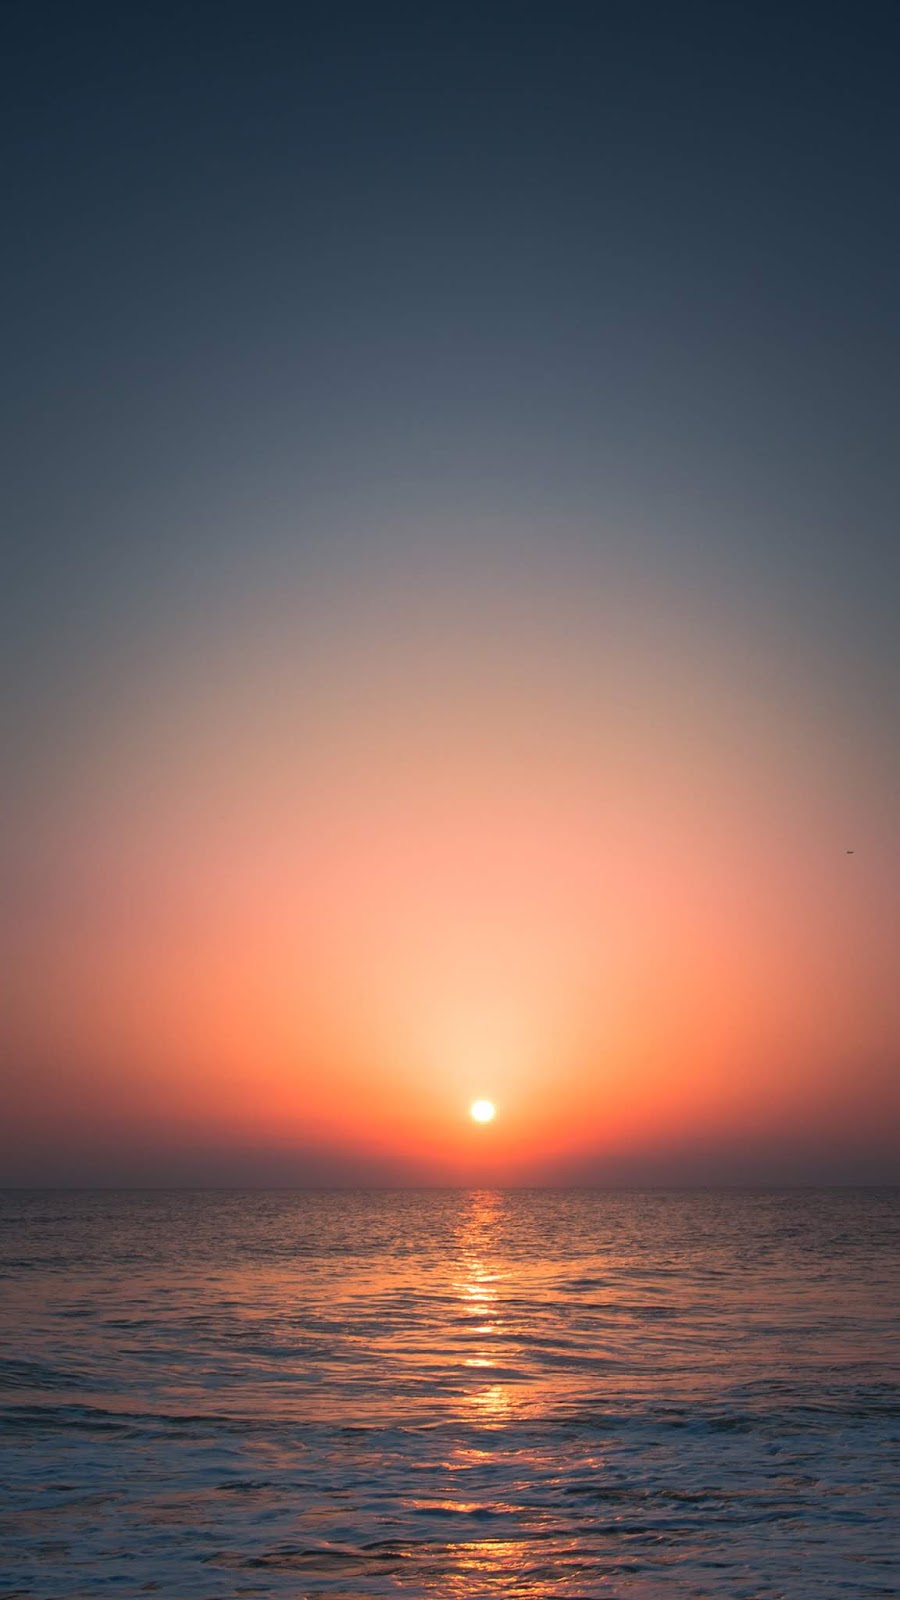 Sunset in the calm beach